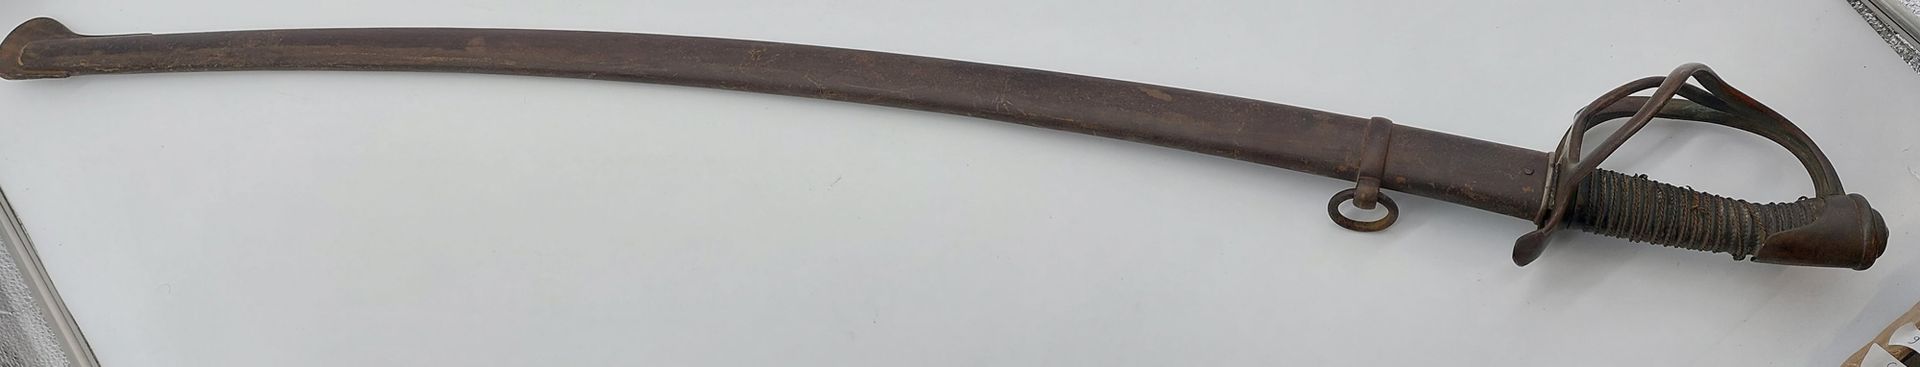 Null 骑士团的萨布瑞(CAVALRY SABRE) 

轻型部队 

带皮带的金属刀鞘

沙特莱罗的武器制造厂

第三共和国1874年

精美的标记和钉子
&hellip;